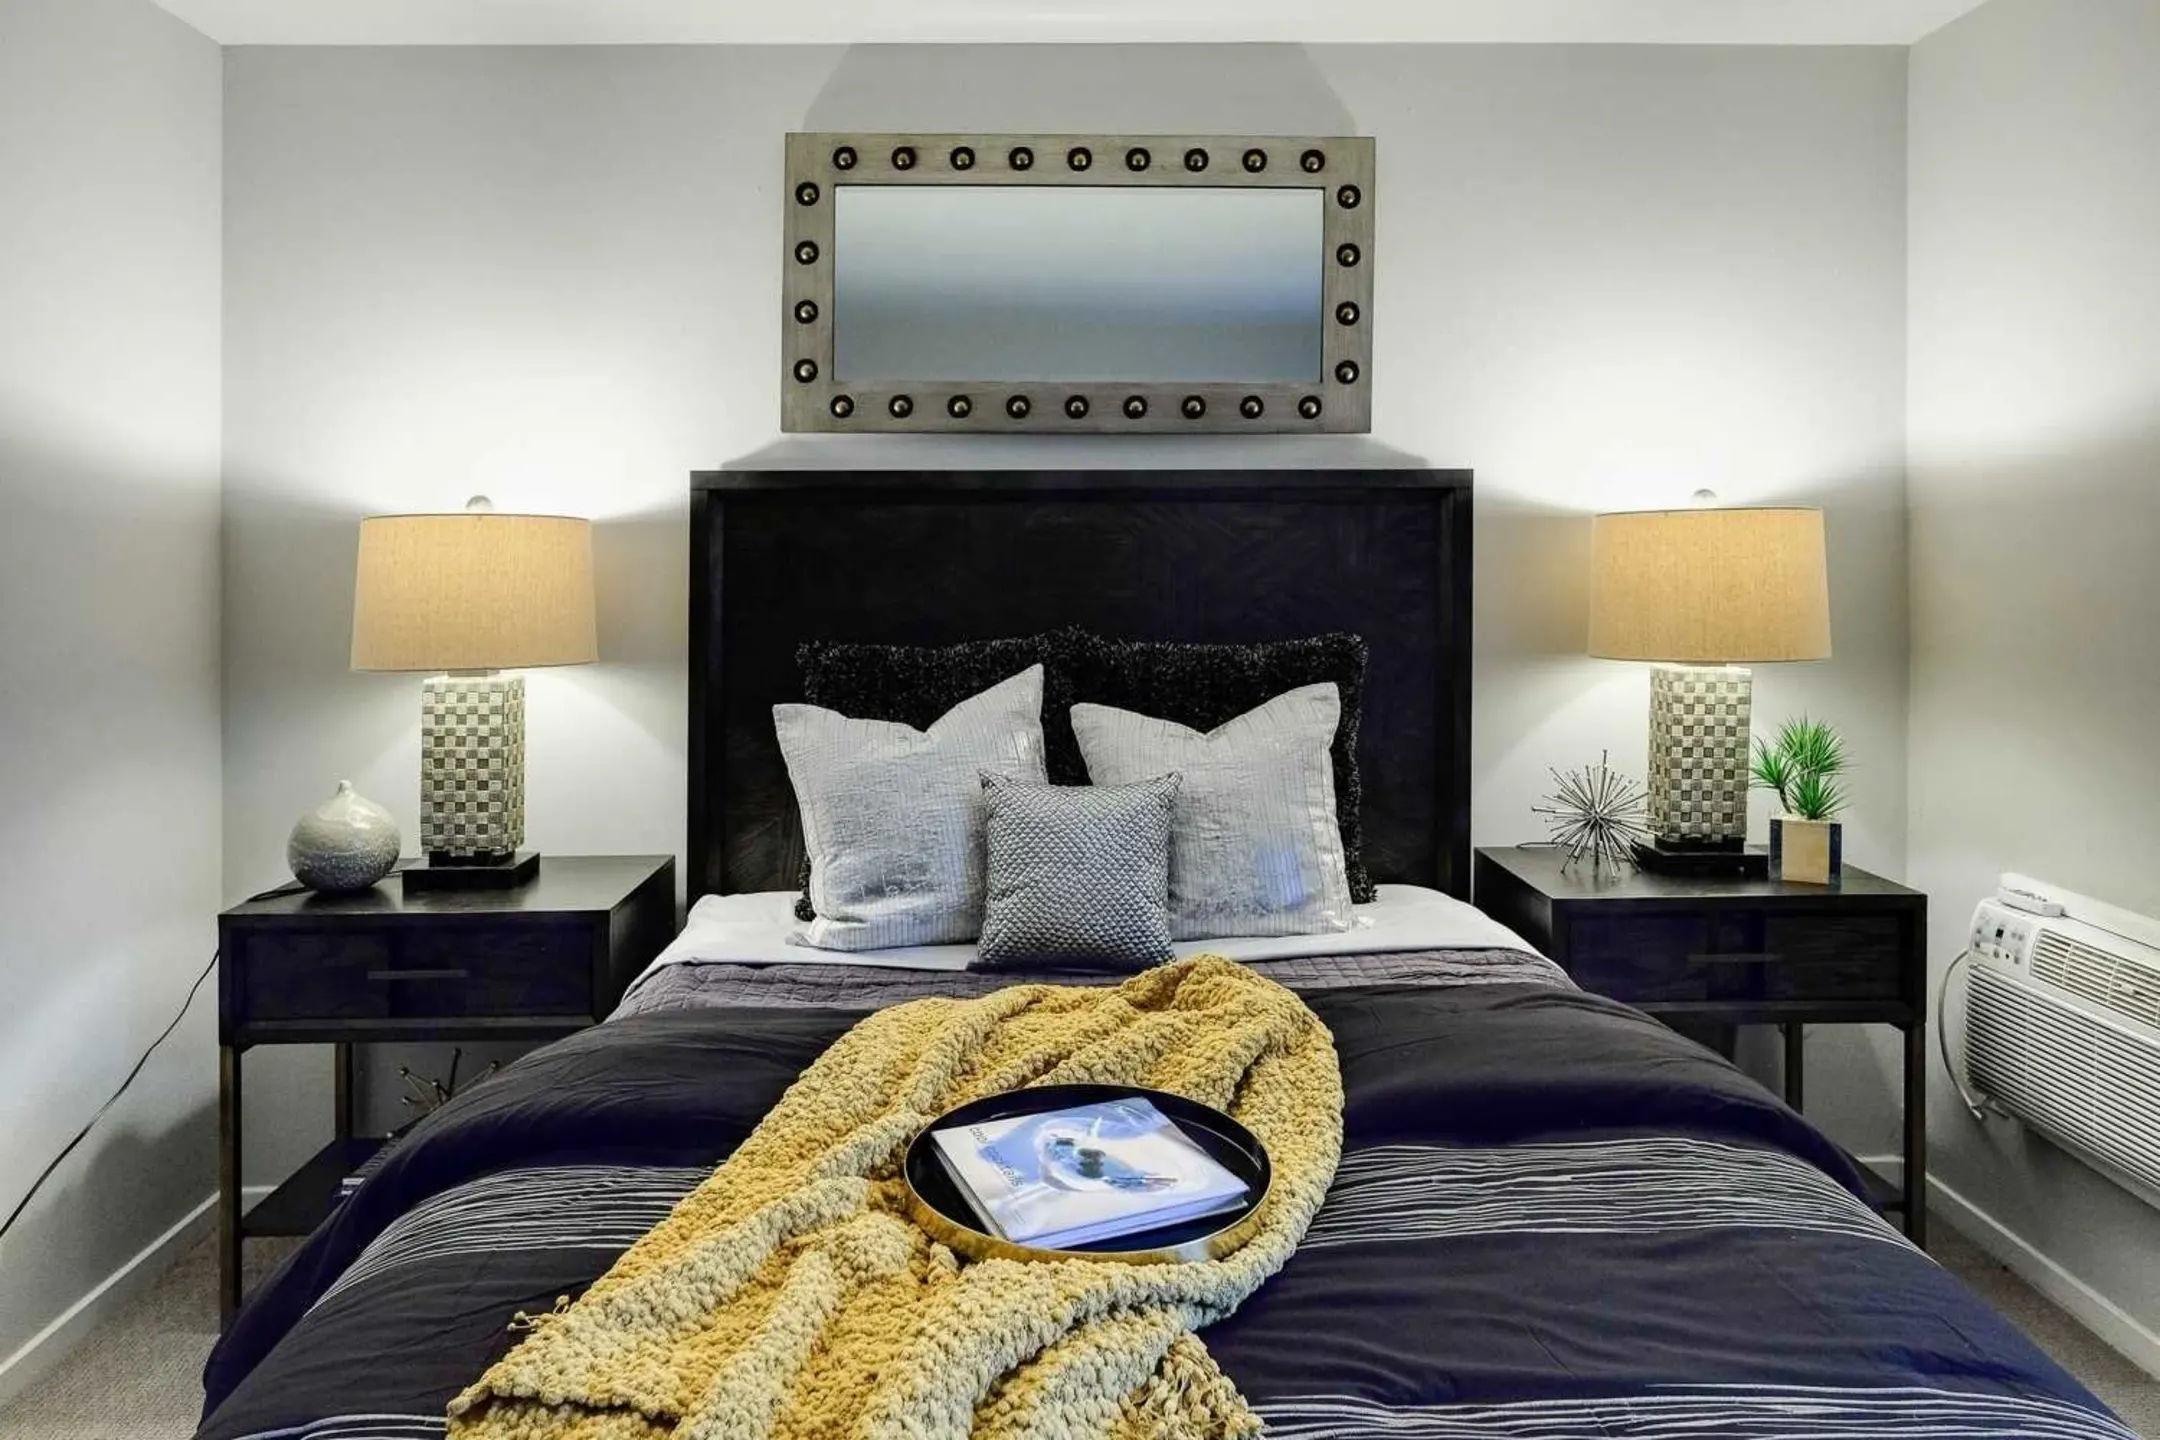 Bedroom - Merriam Park Apartments - Saint Paul, MN